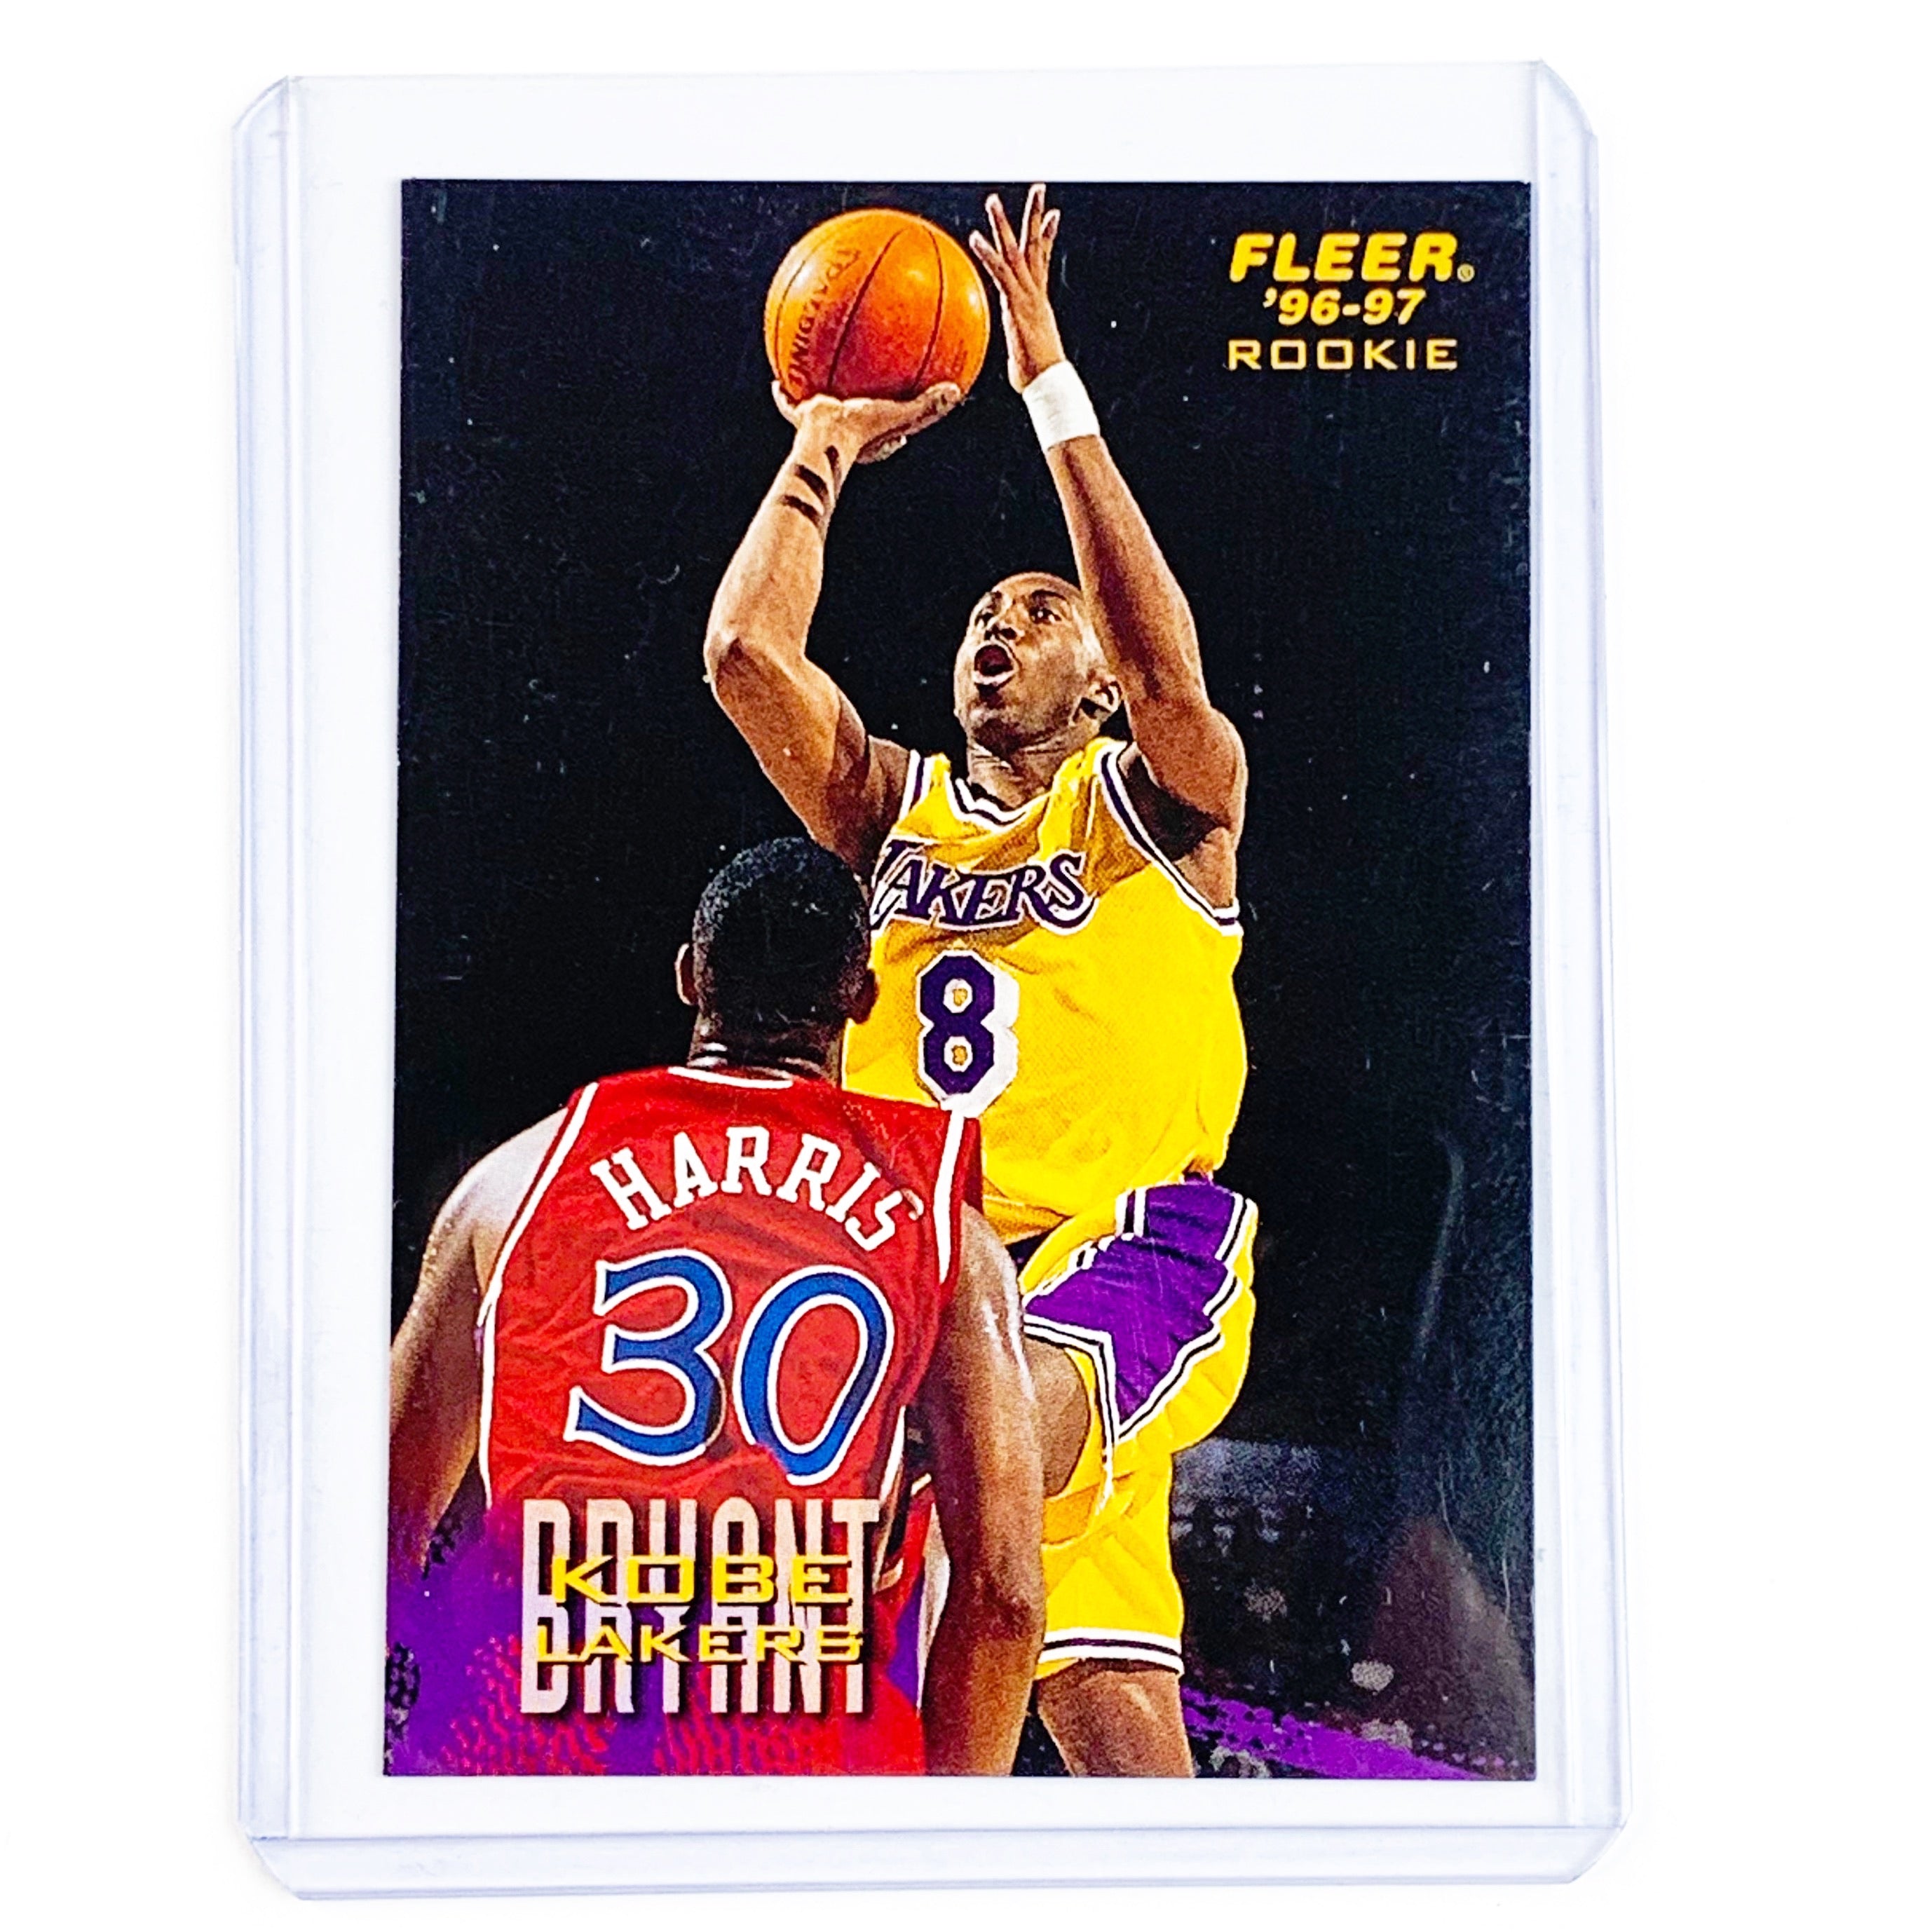 Kobe Bryant 2017-18 Panini Revolution Autographs – Basketball Card Guy